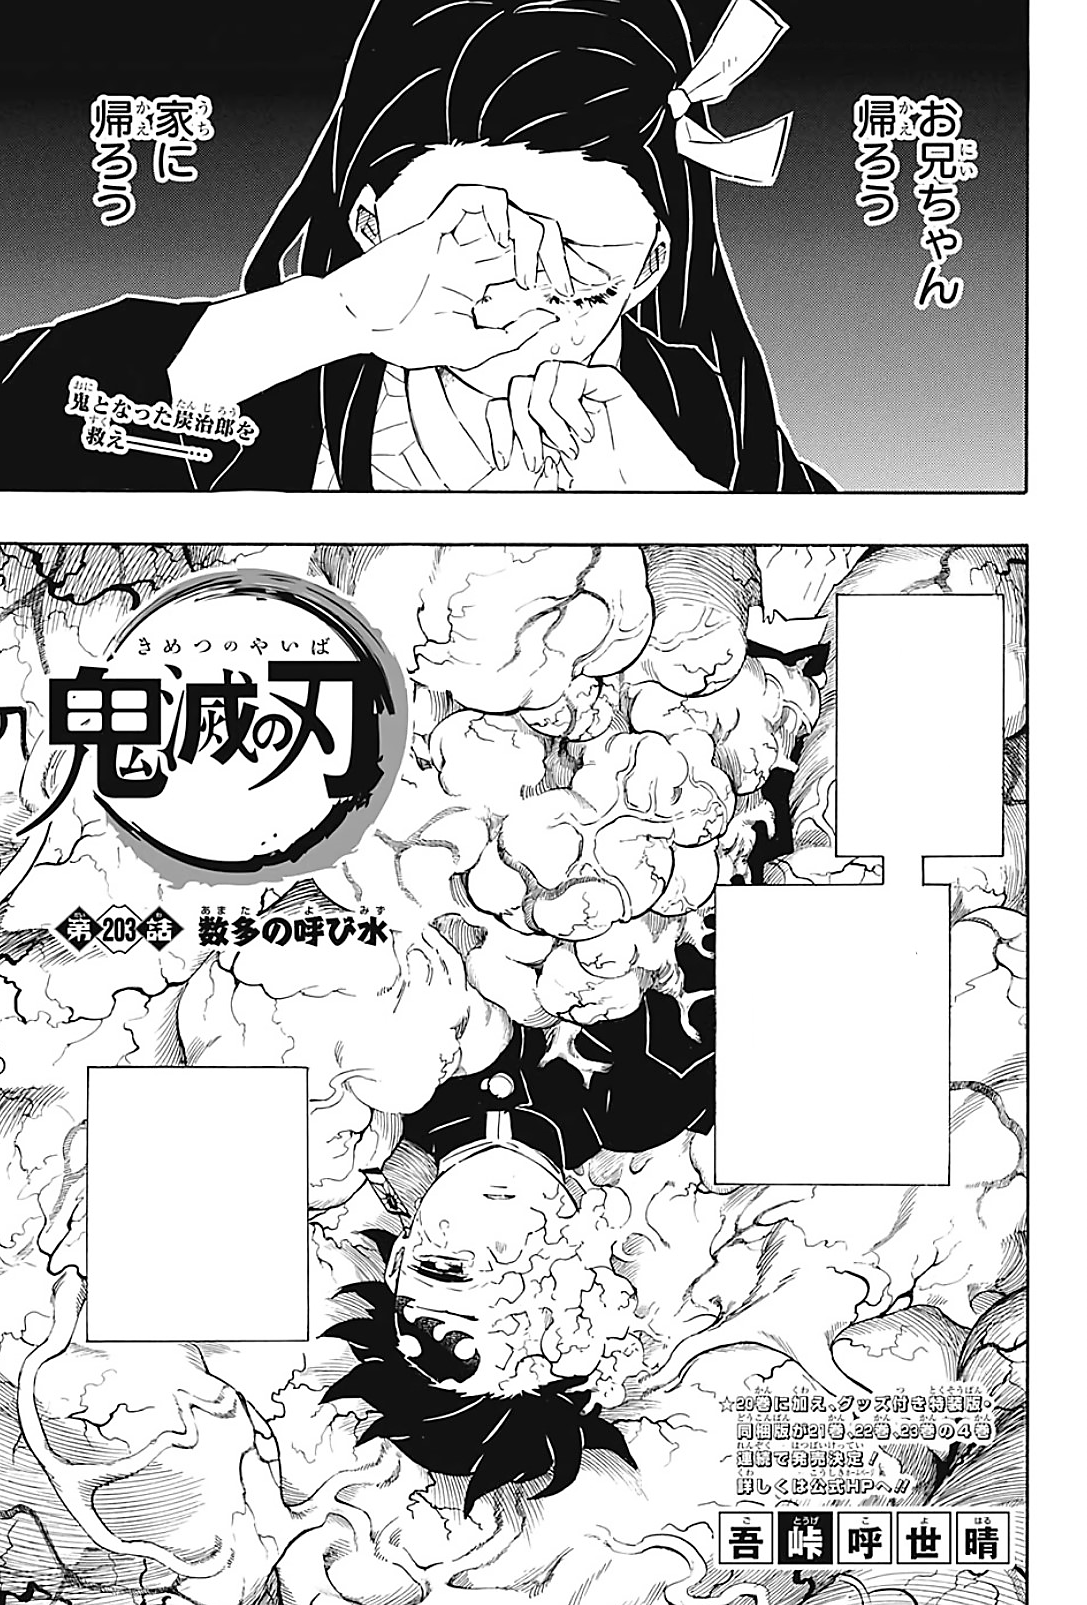 Demon Slayer - Kimetsu no Yaiba, Chapter 203 - Demon Slayer